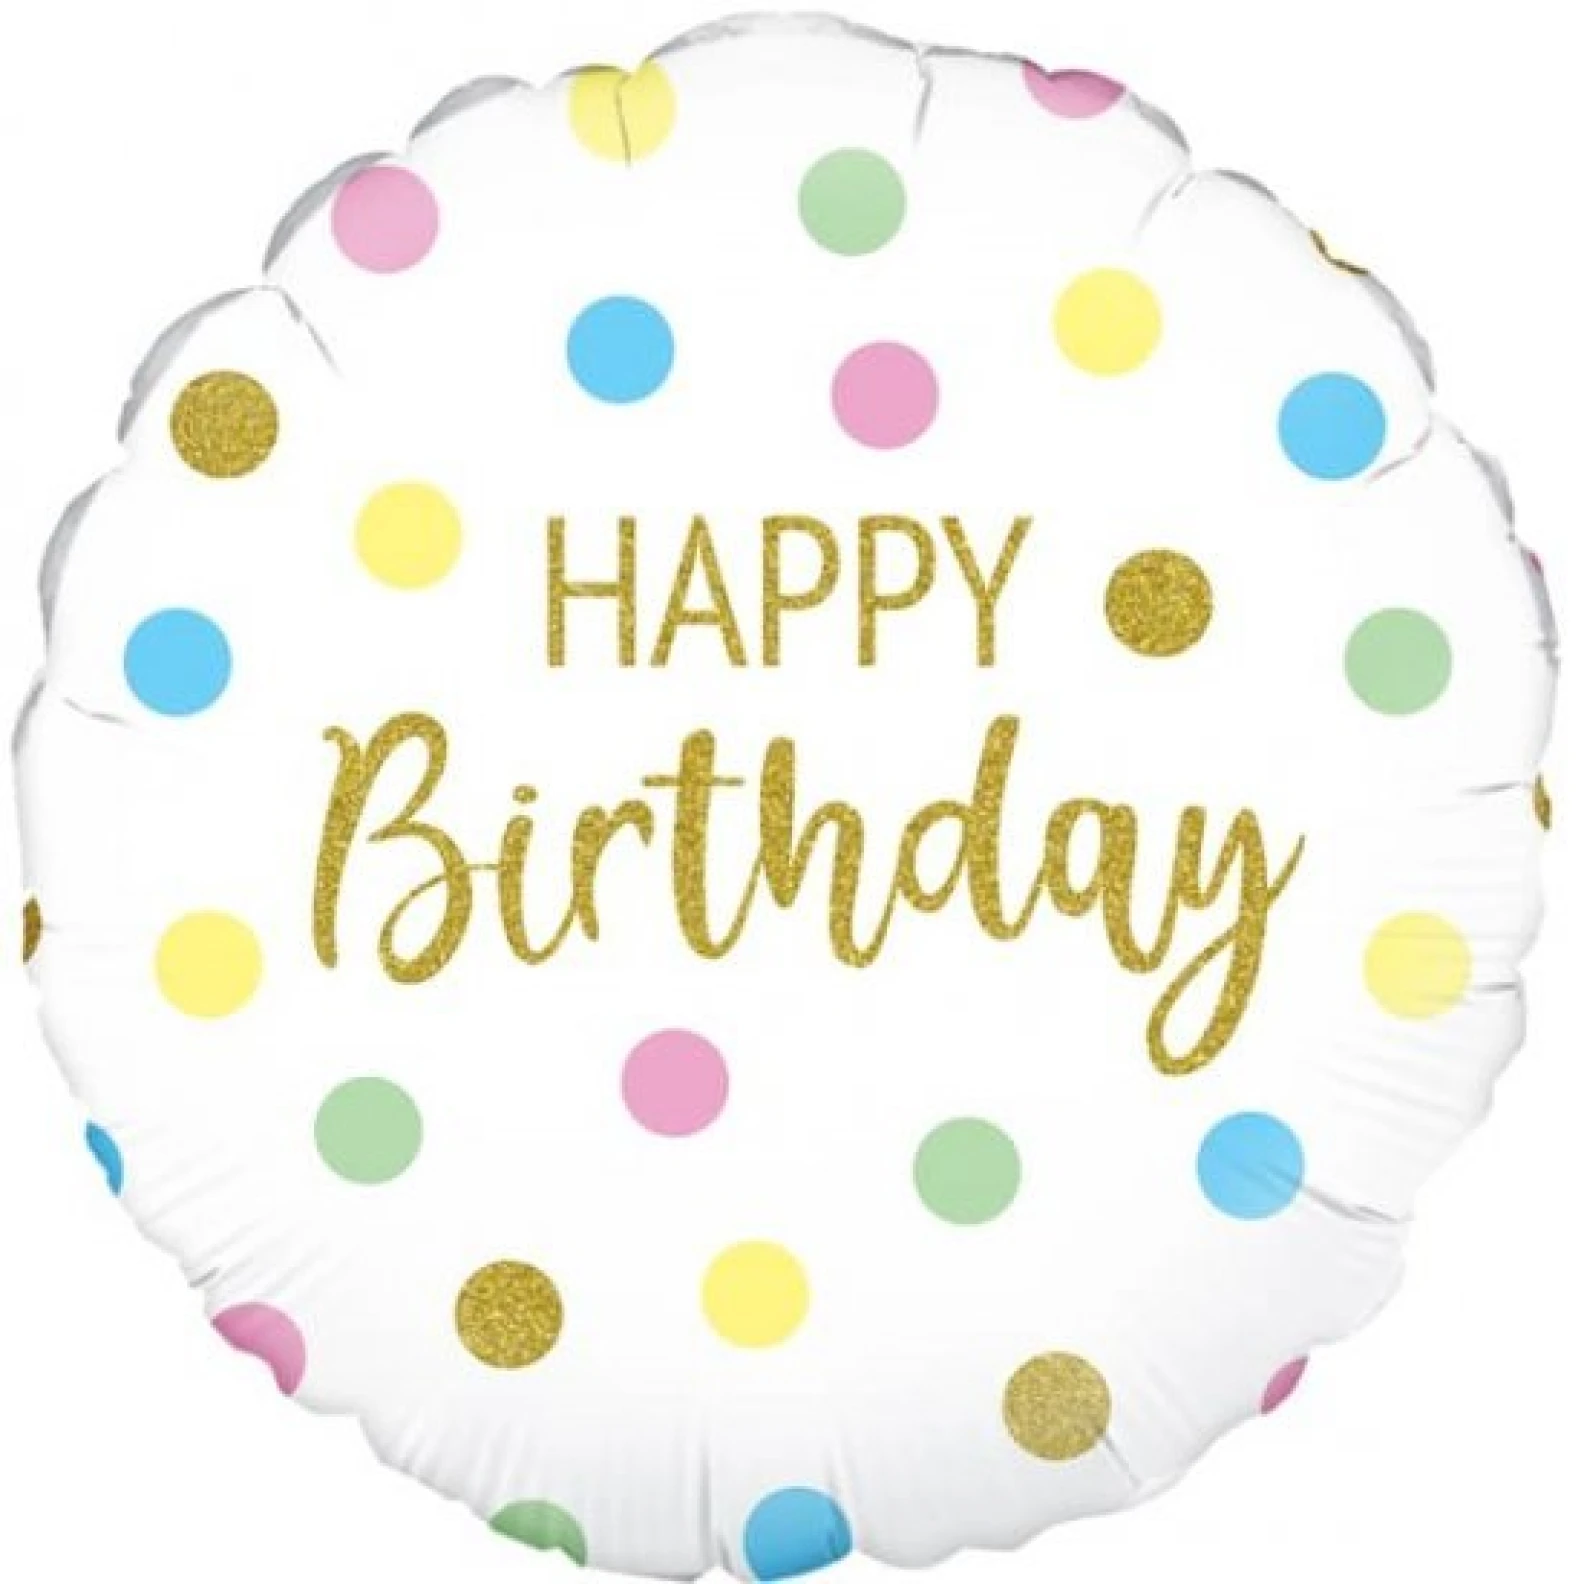 Happy Birthday Pastel Foil Balloon - image №1